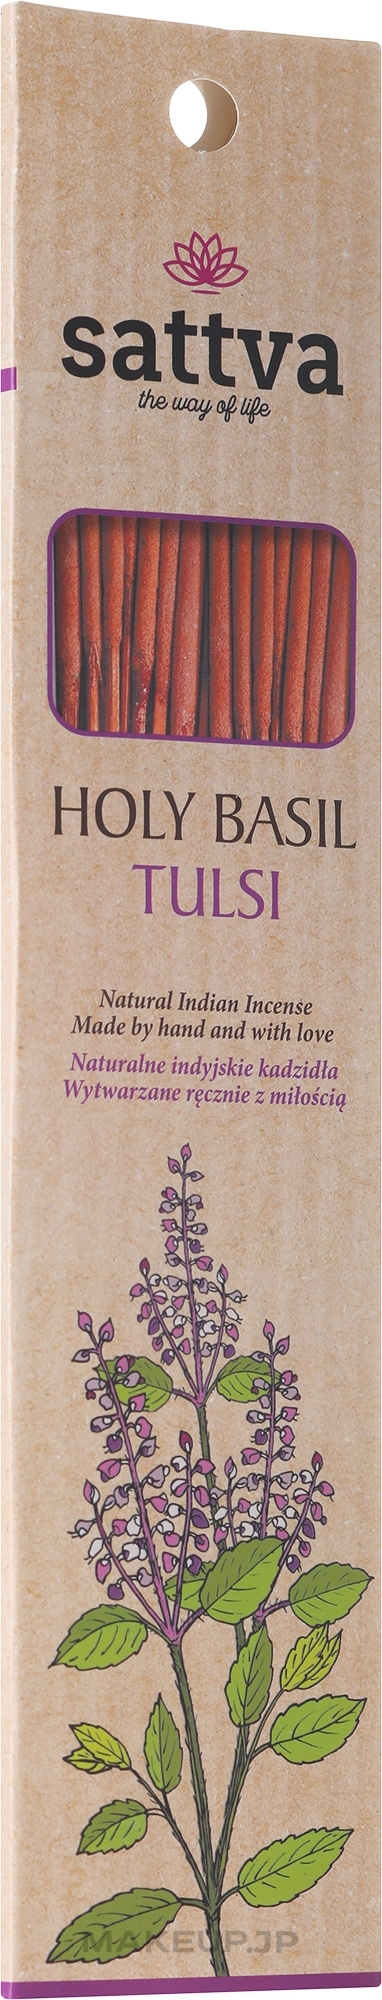 Incense Sticks "Basil" - Sattva Holy basil — photo 15 szt.